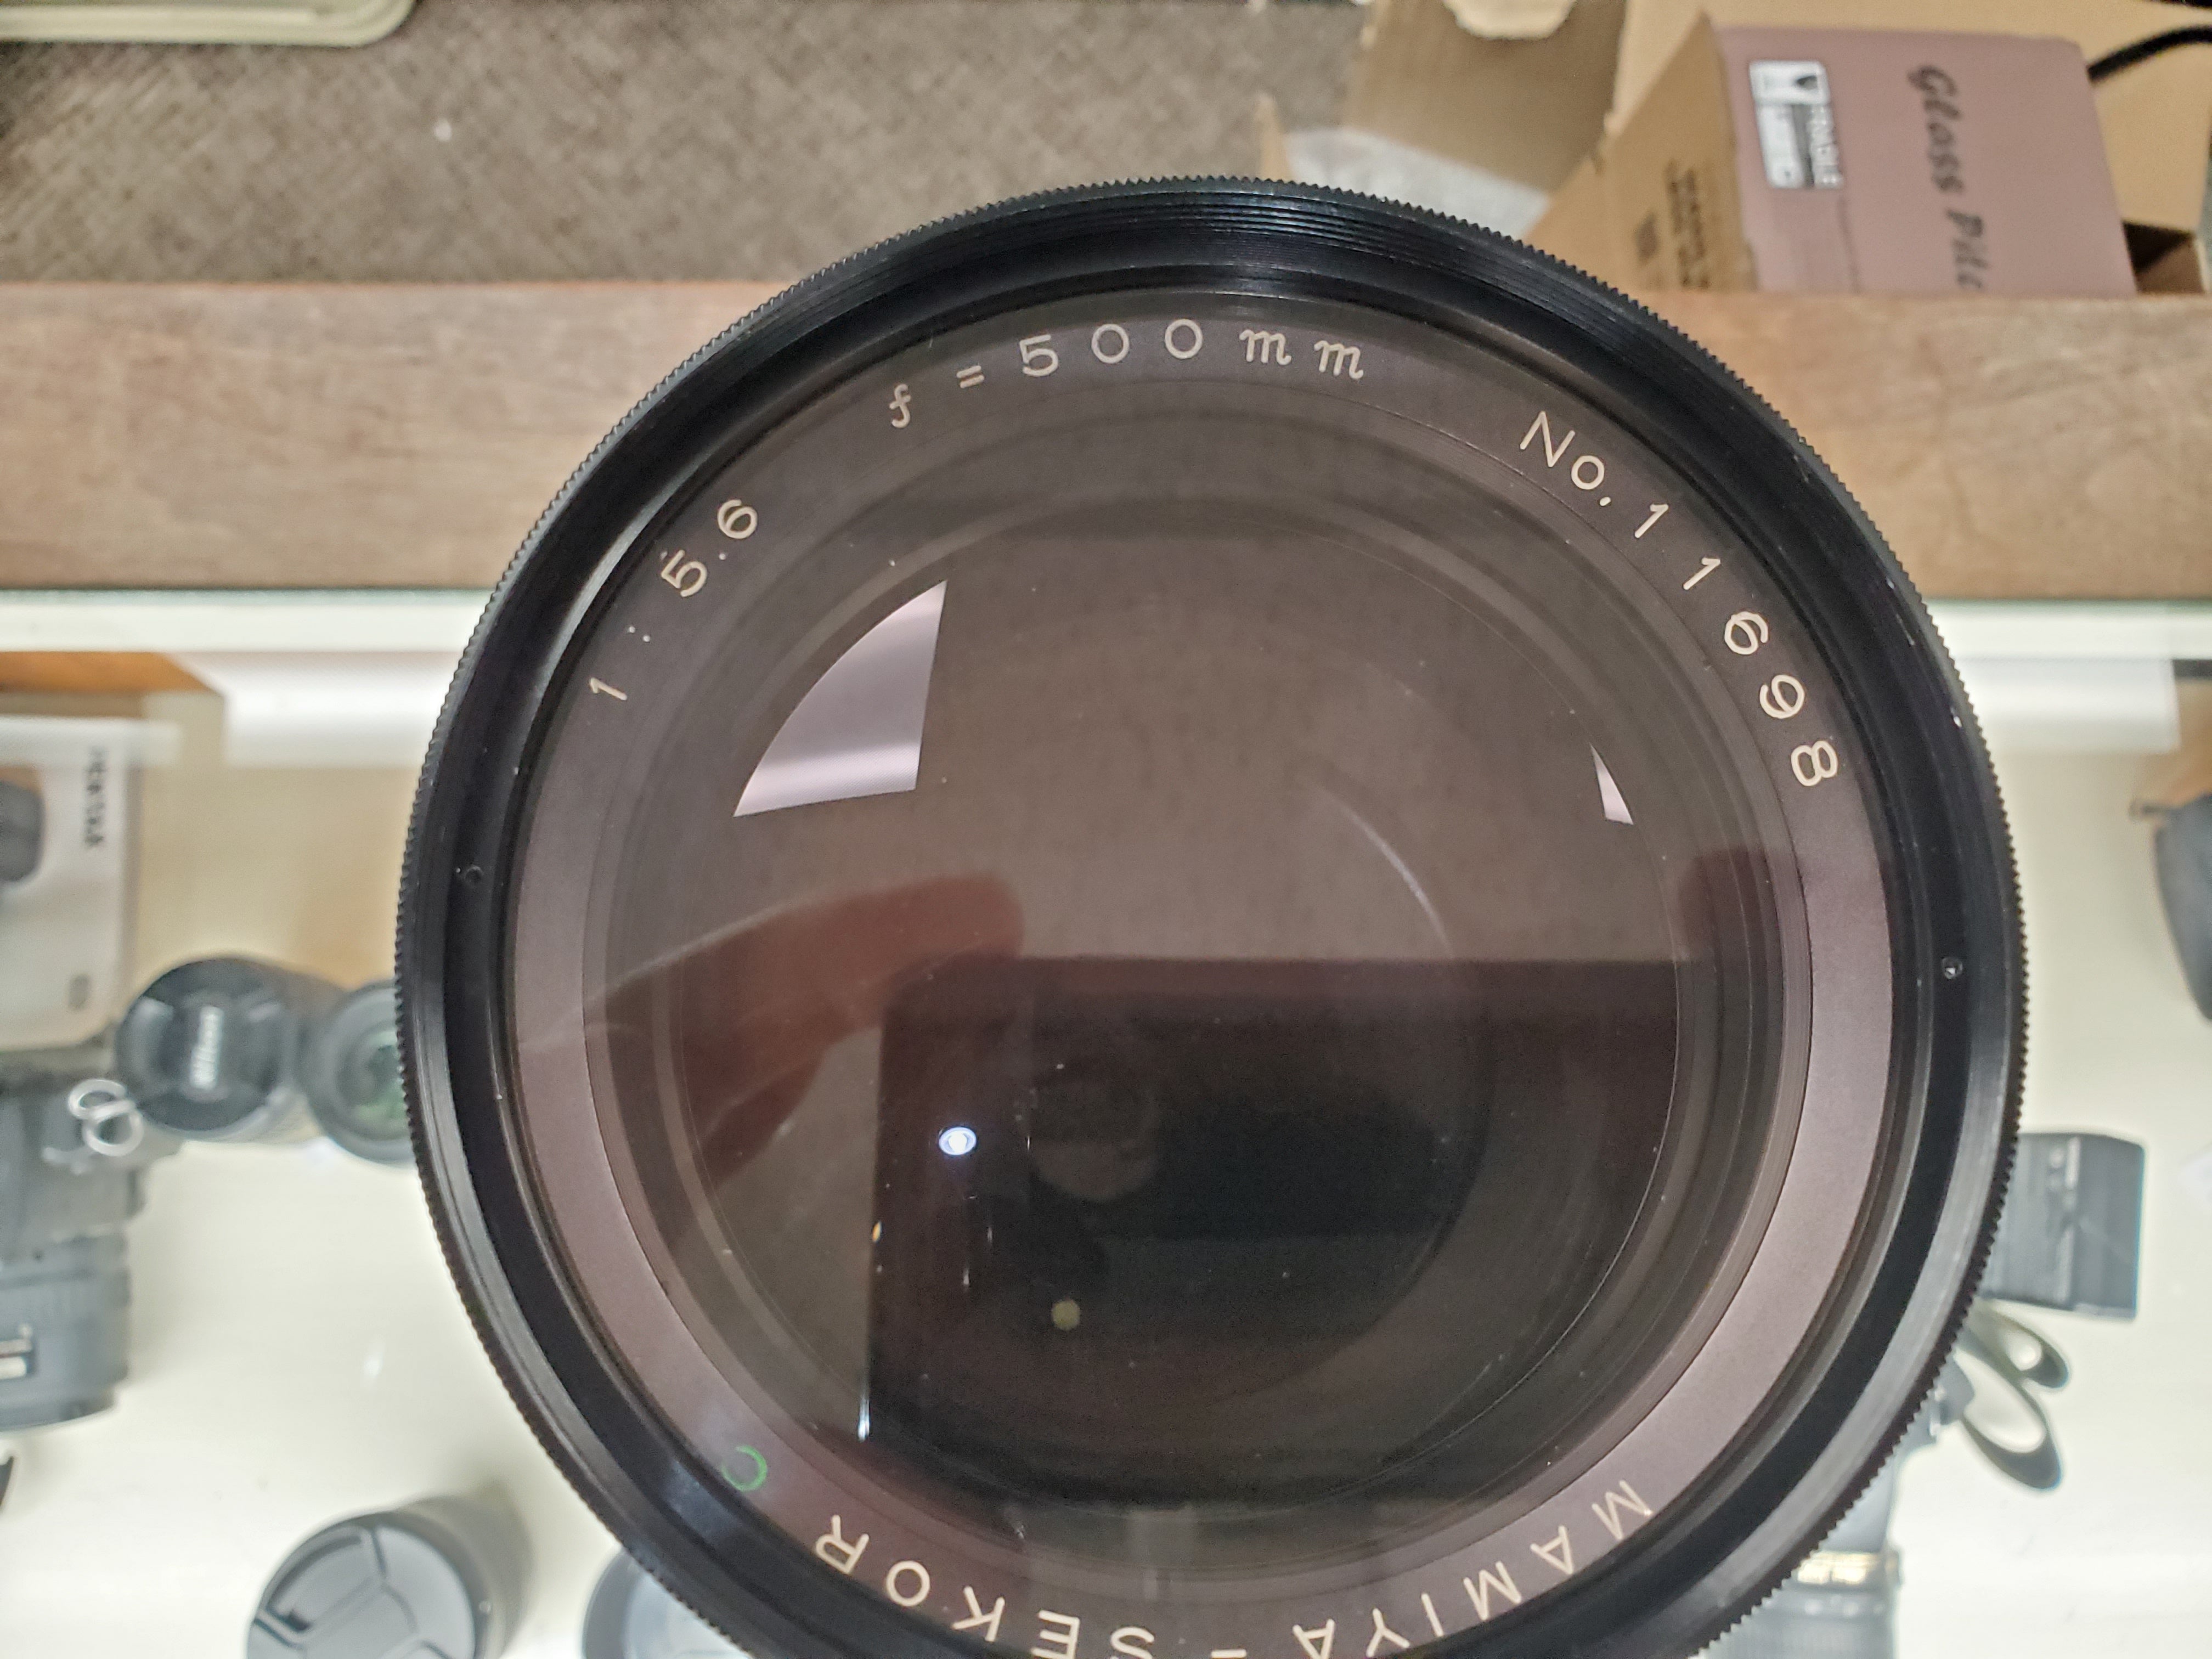 MINT Mamiya-Sekor C 500mm 5.6 Medium Format Lens for 645 Super 1000s Pro, CLA'd Canada - Paramount Camera & Repair